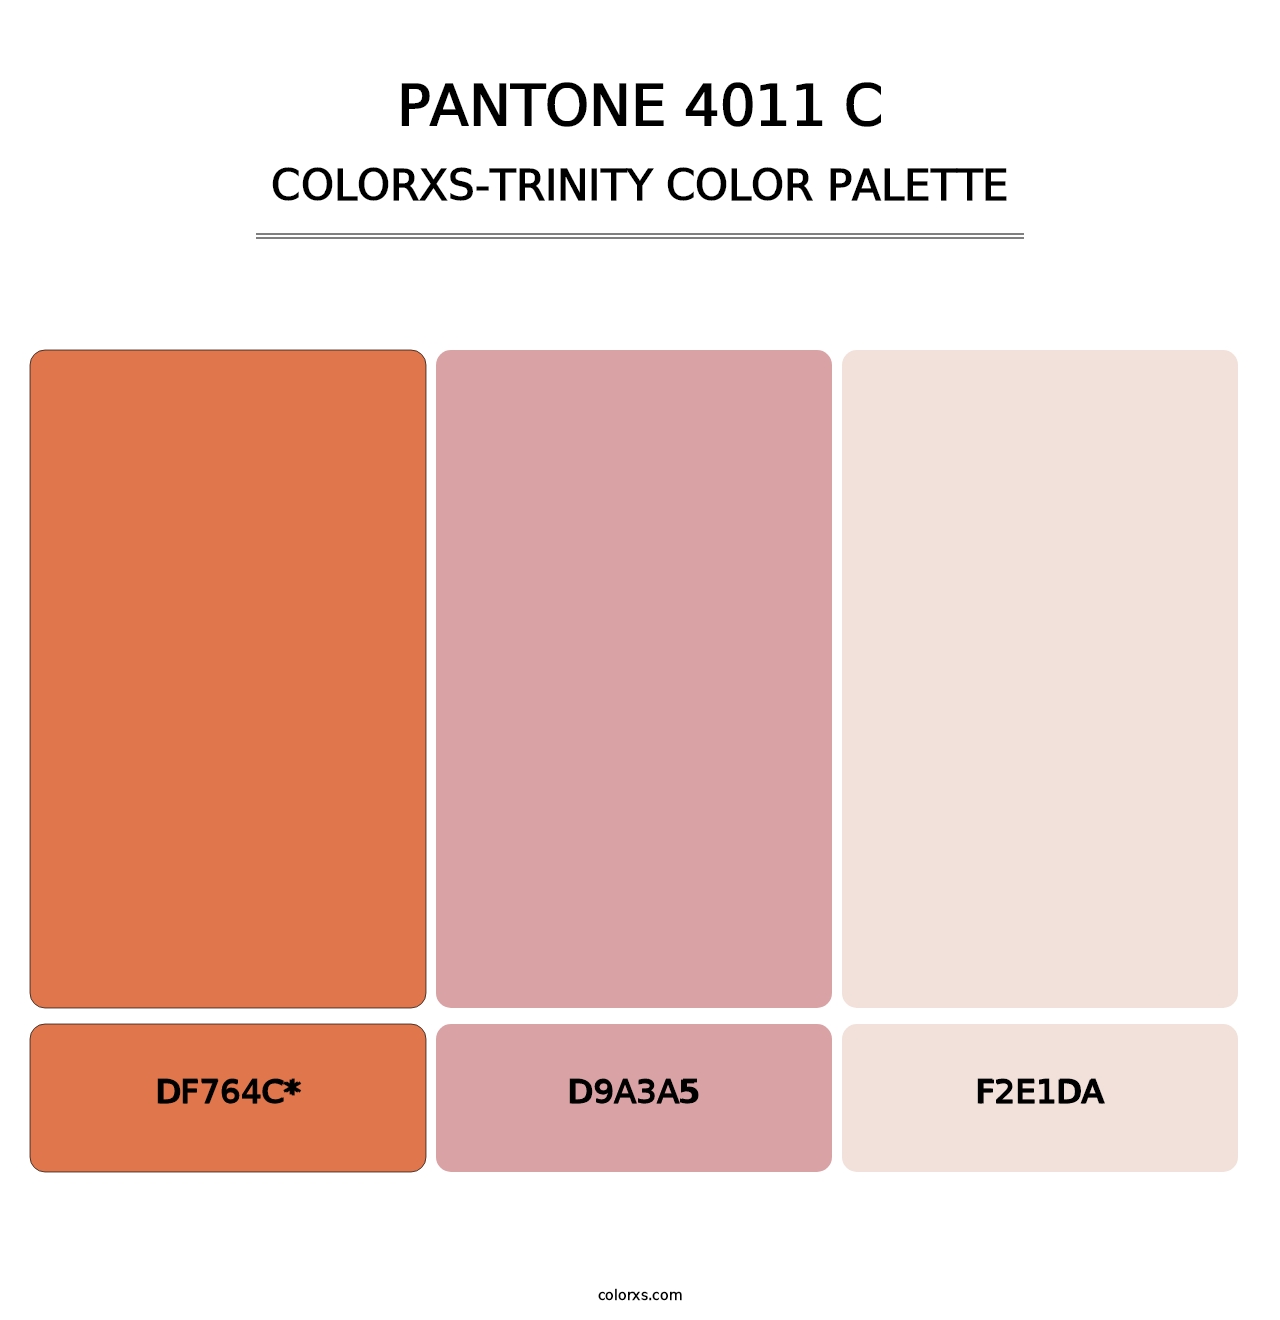 PANTONE 4011 C - Colorxs Trinity Palette